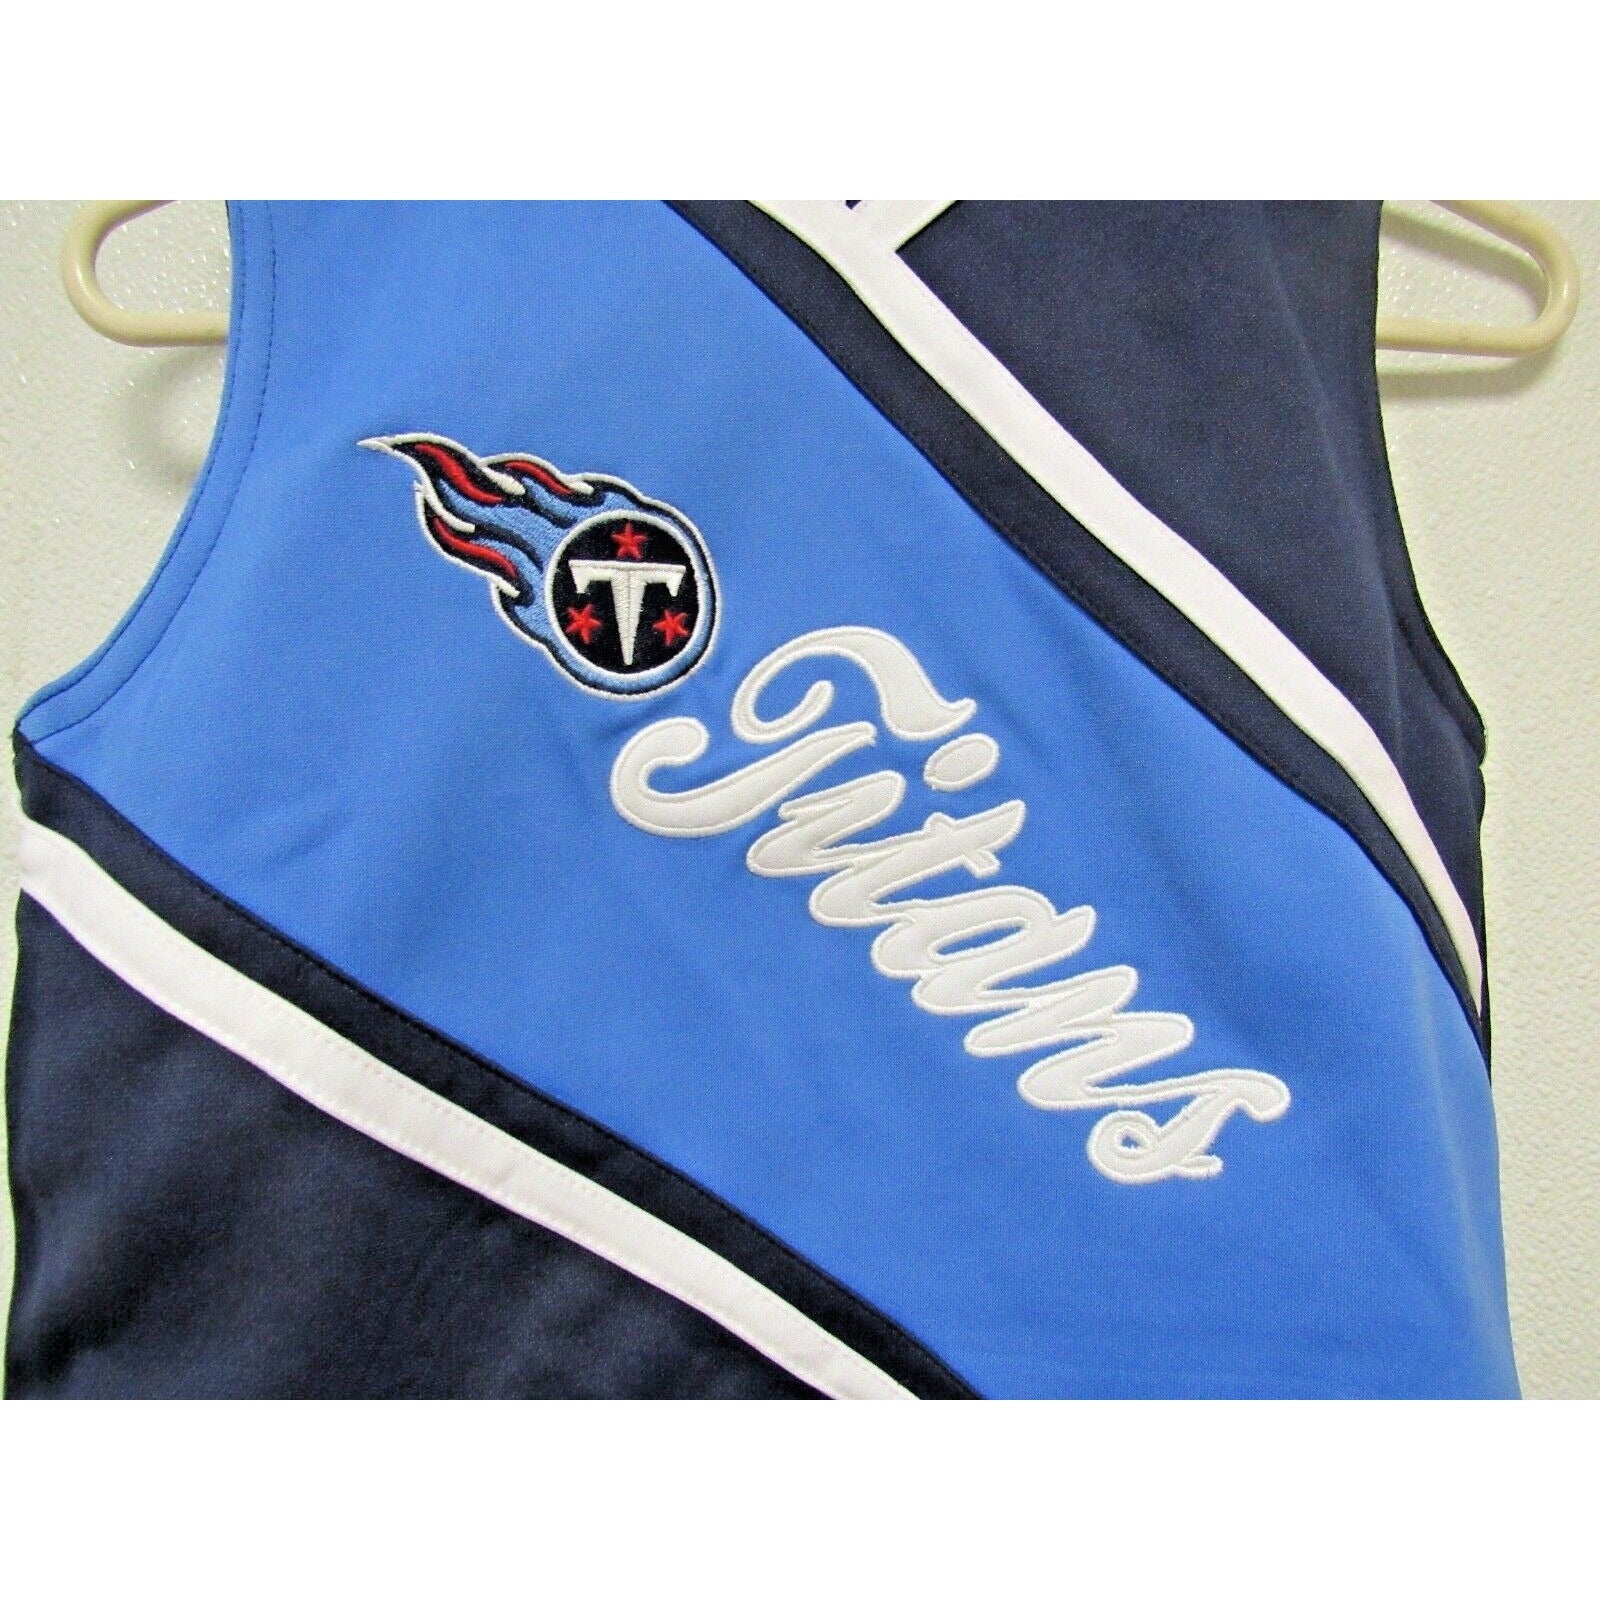 NFL Tennessee Titans Embroidered Girls Cheerleader Top n Dress Set Medium 10/12